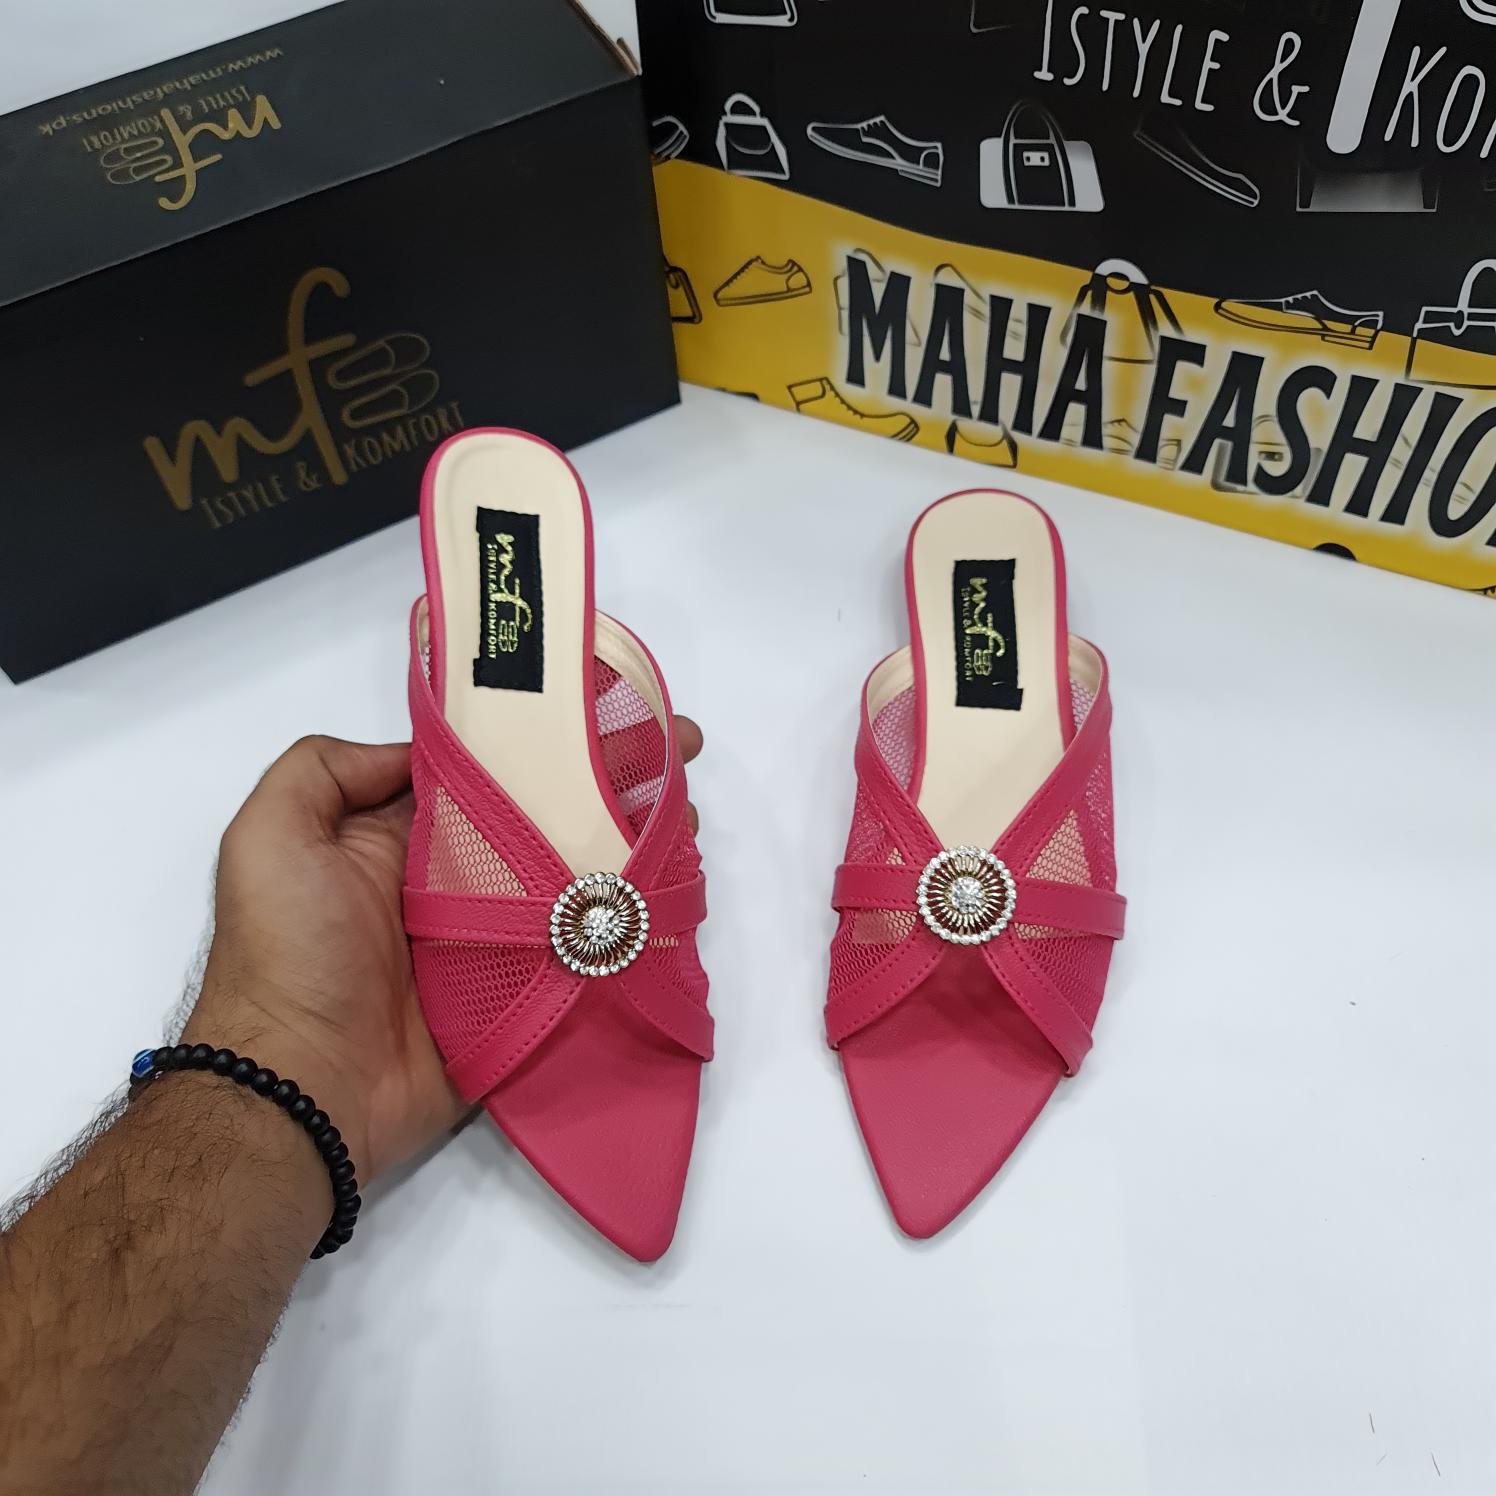 FH-081 - Maha fashions -  